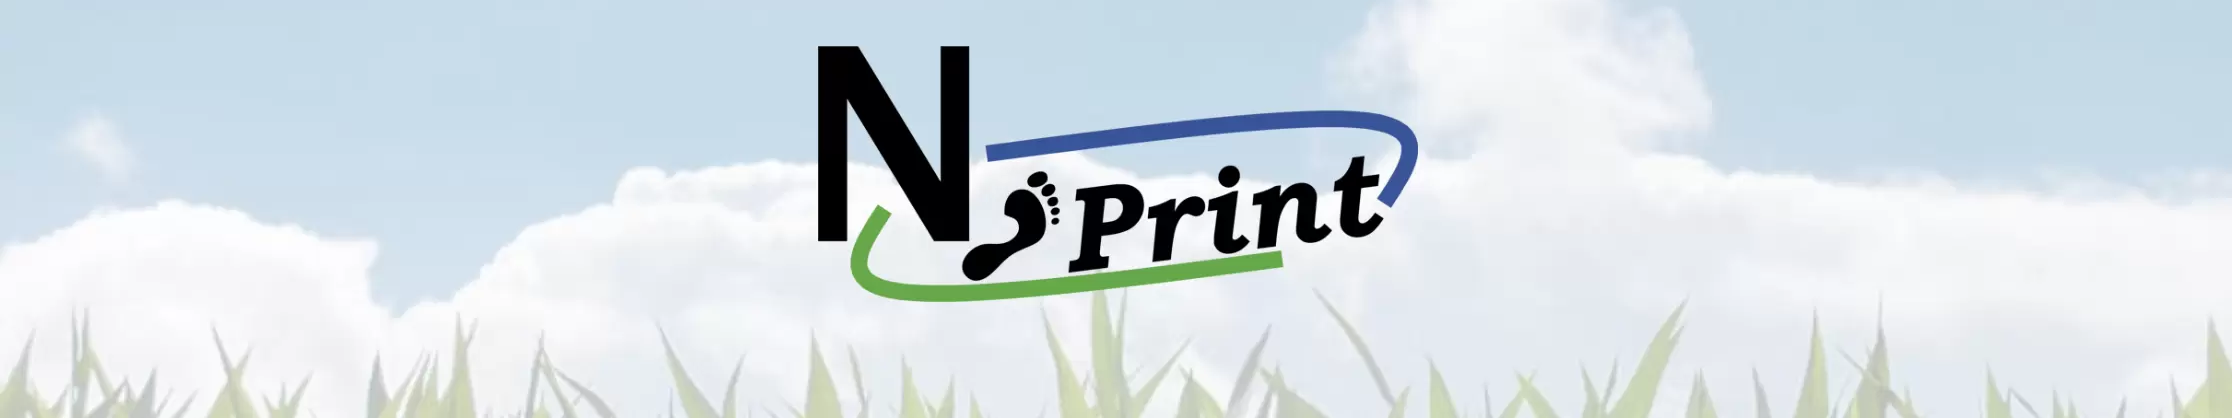 N Print Banner Logo